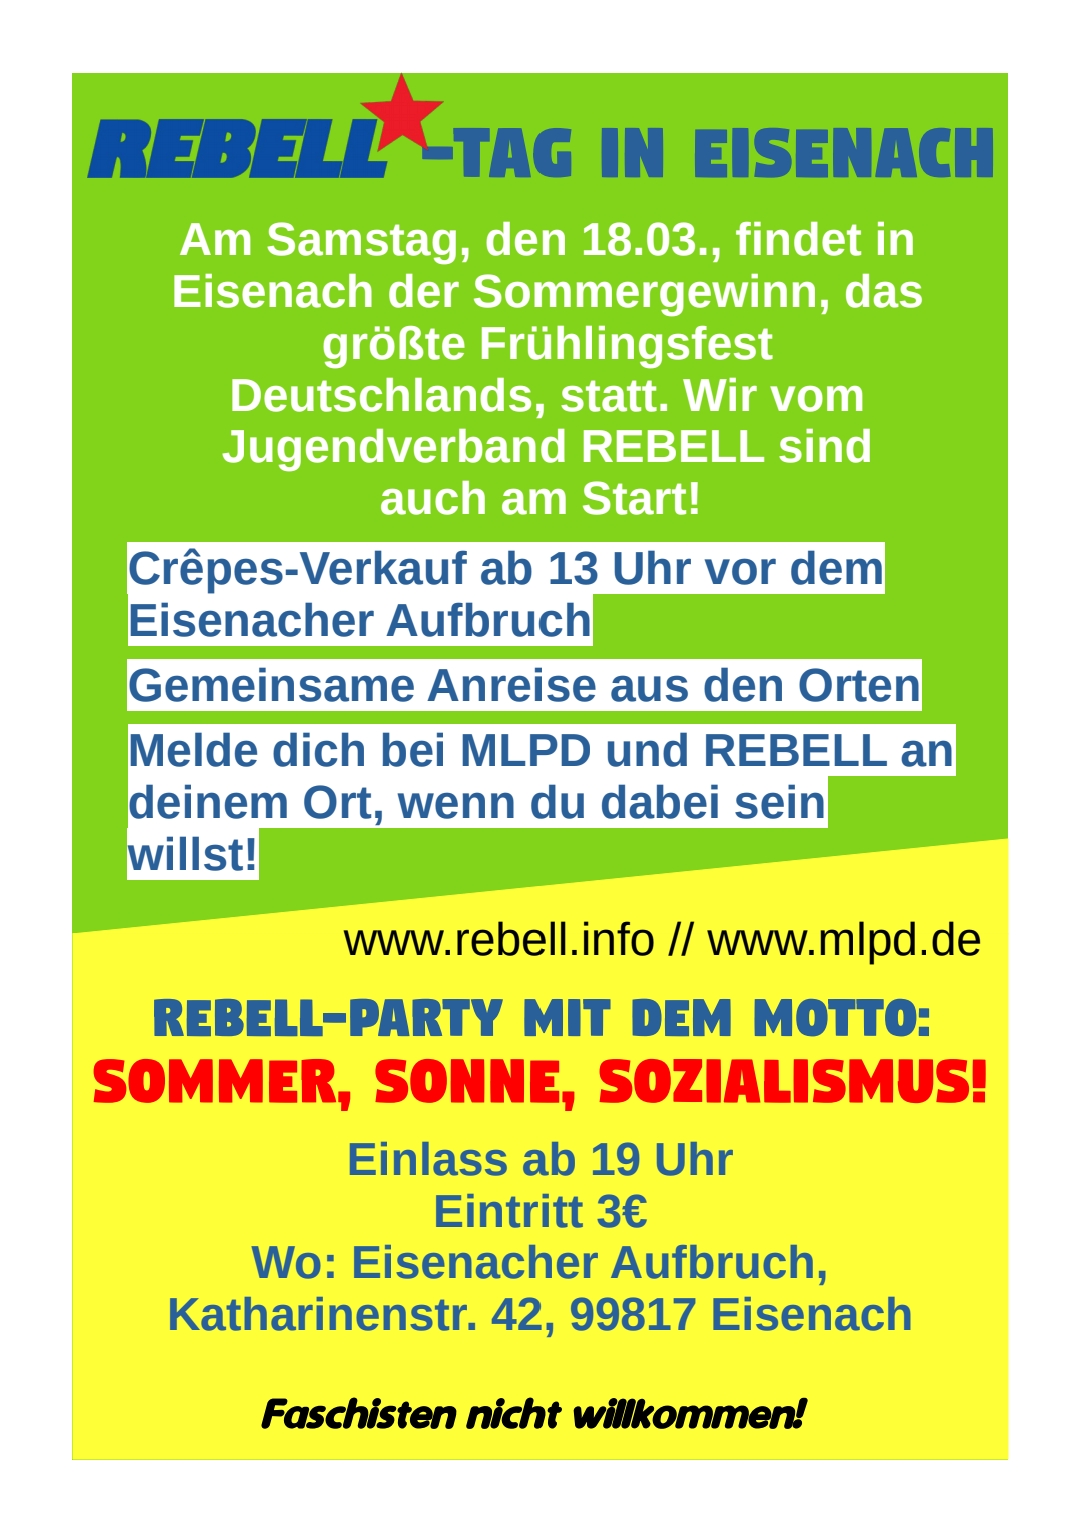 Rebell-Tag in Eisenach